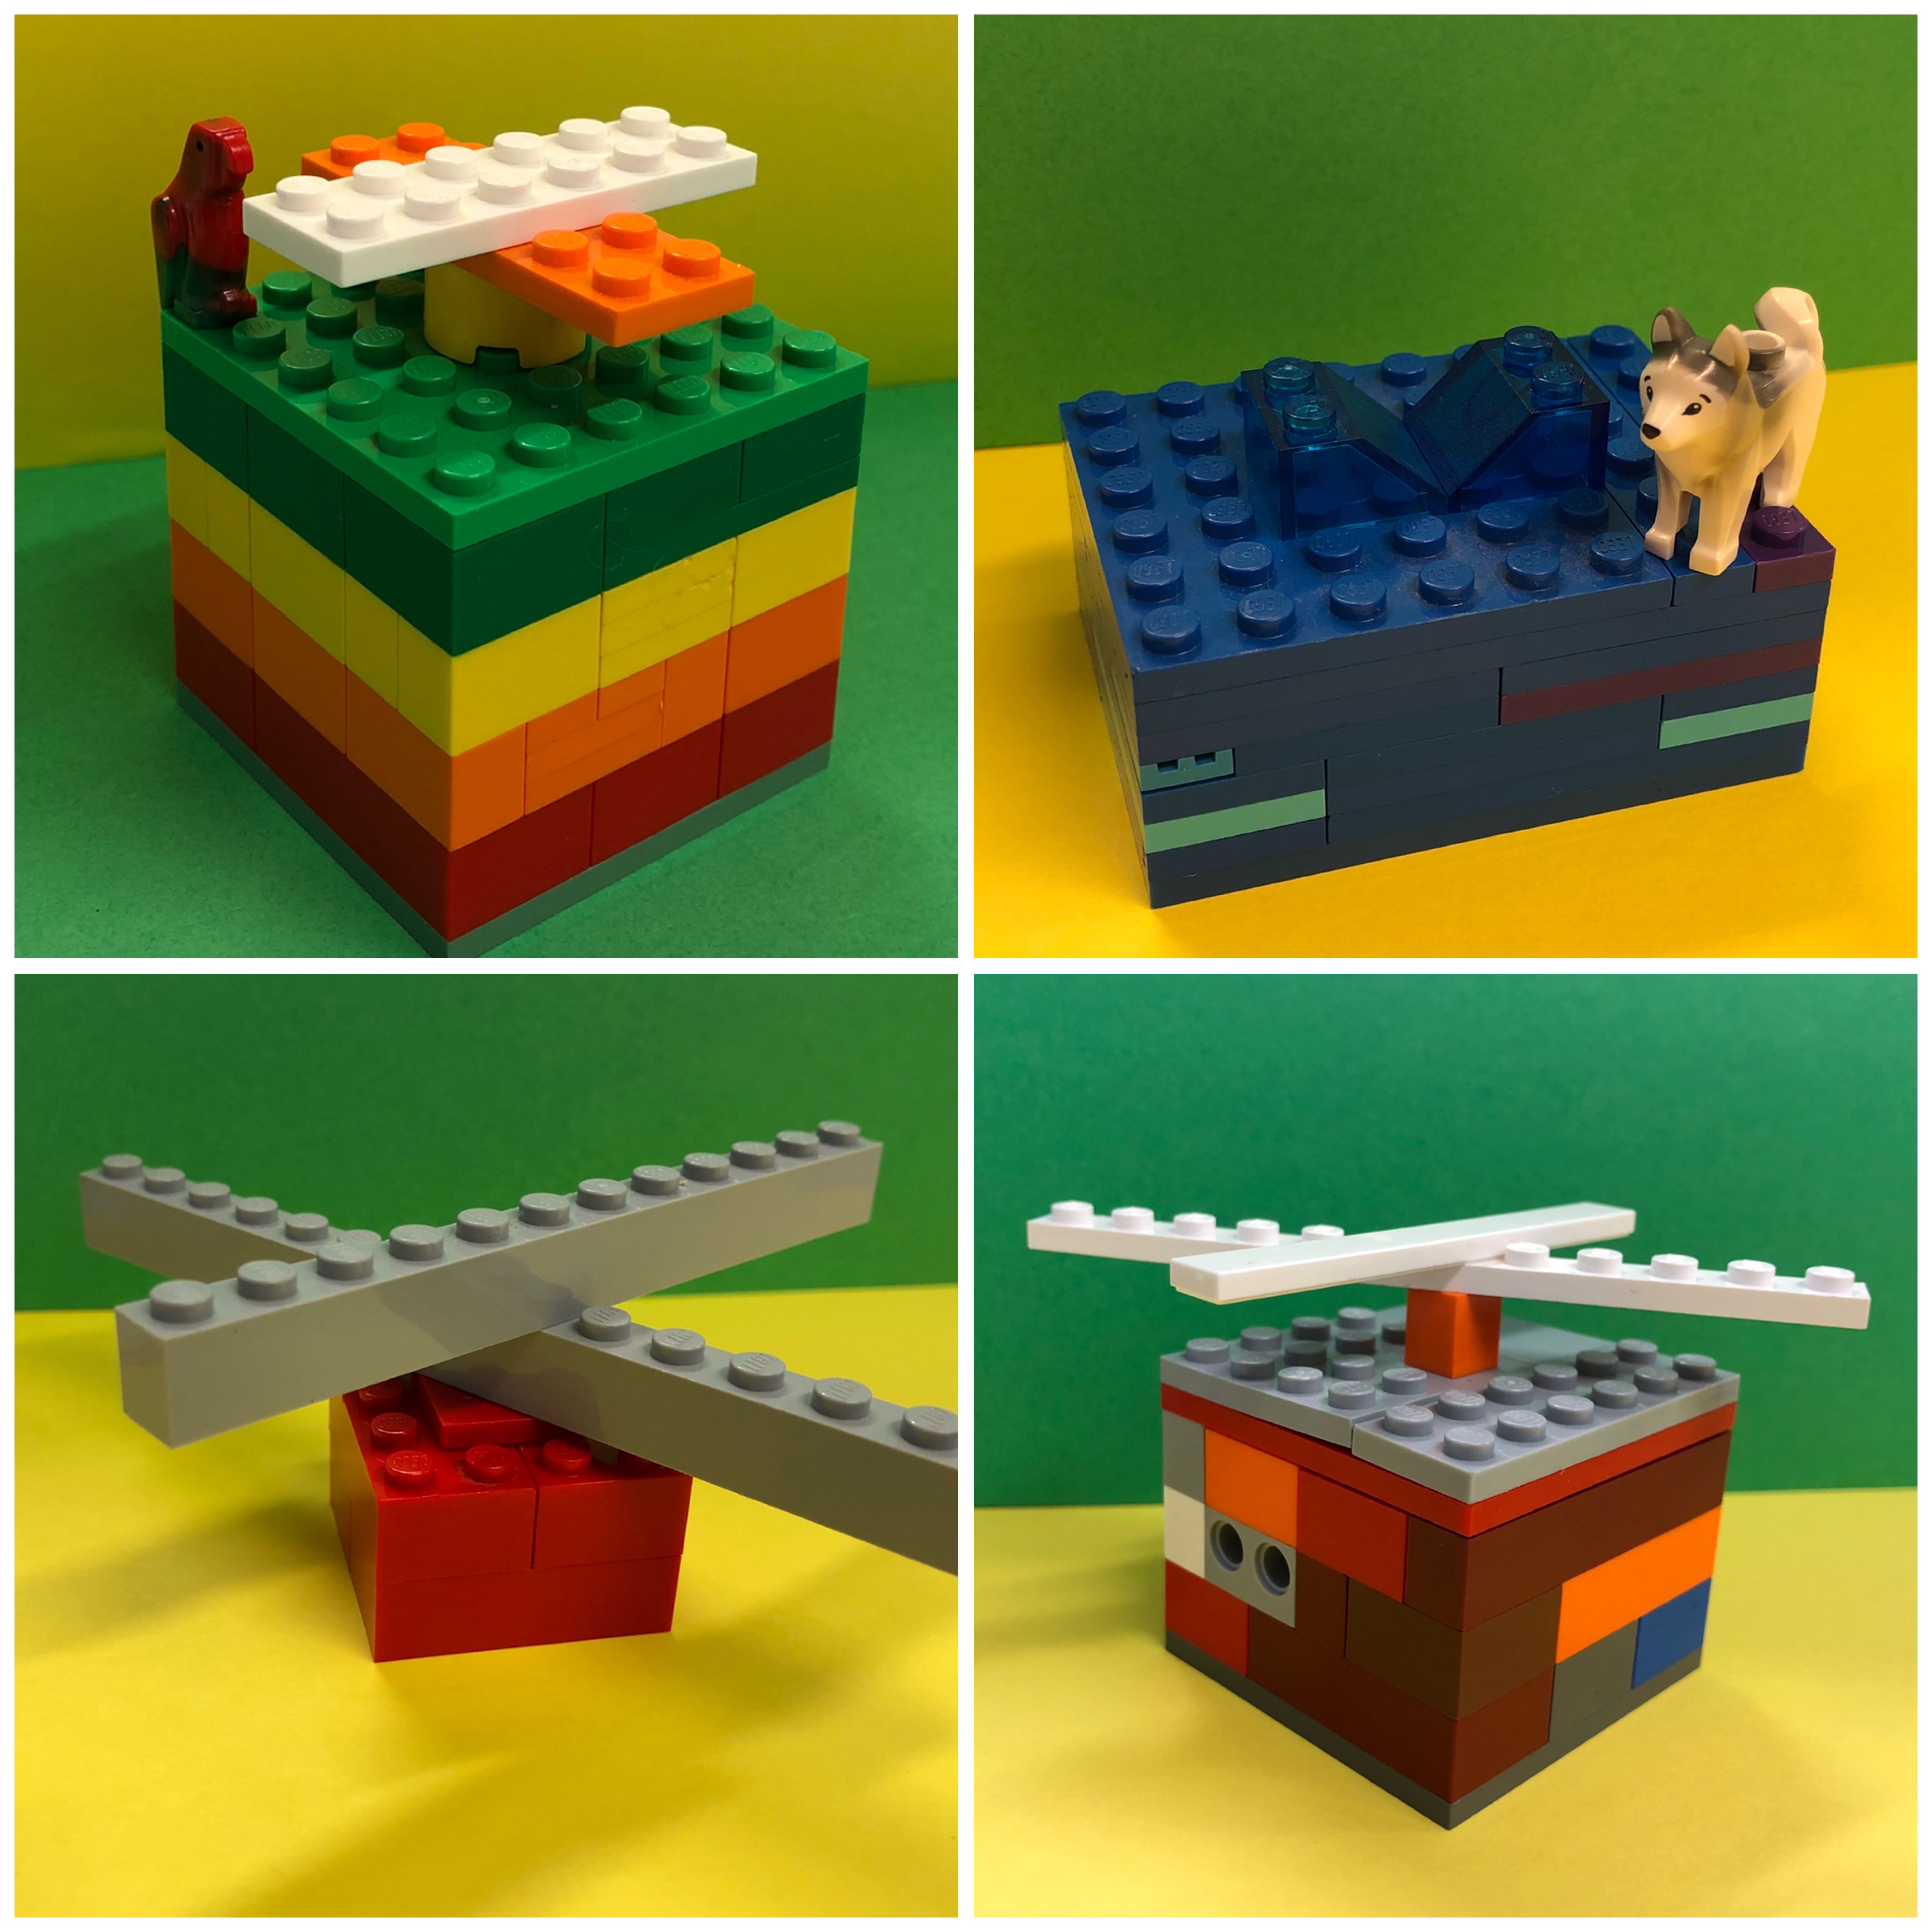 4 Lego presents